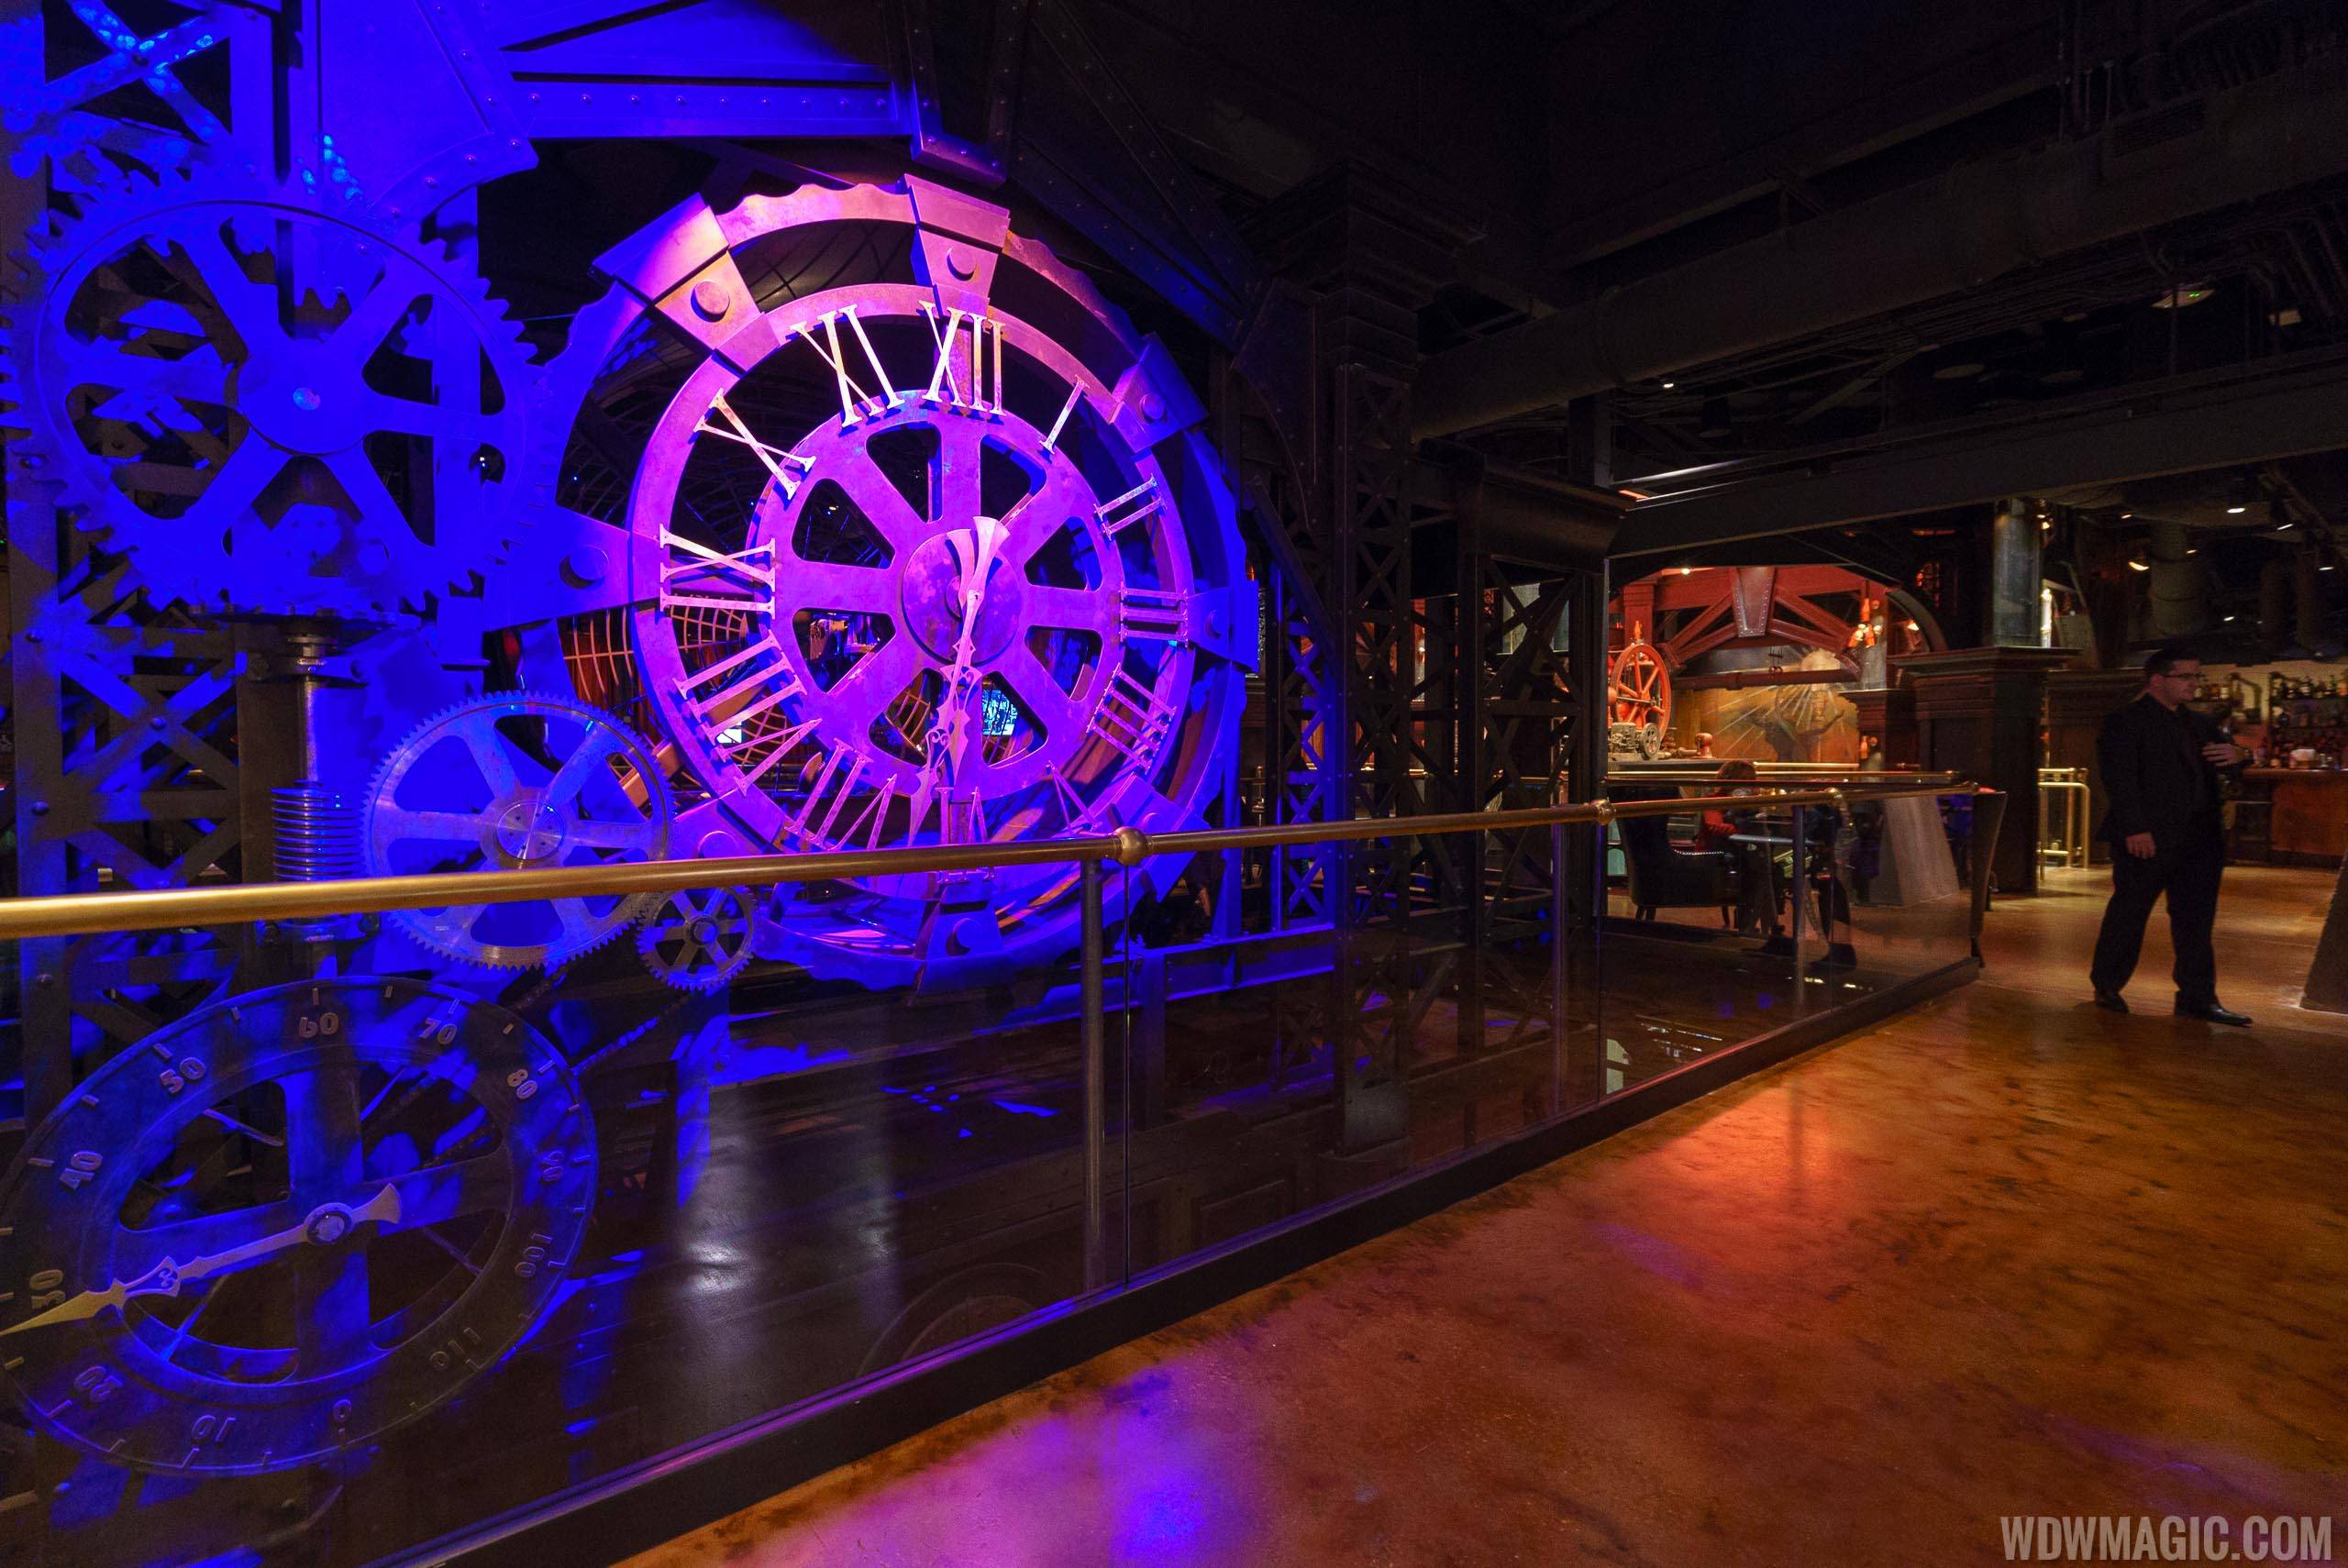 The Edison's mechanical clock